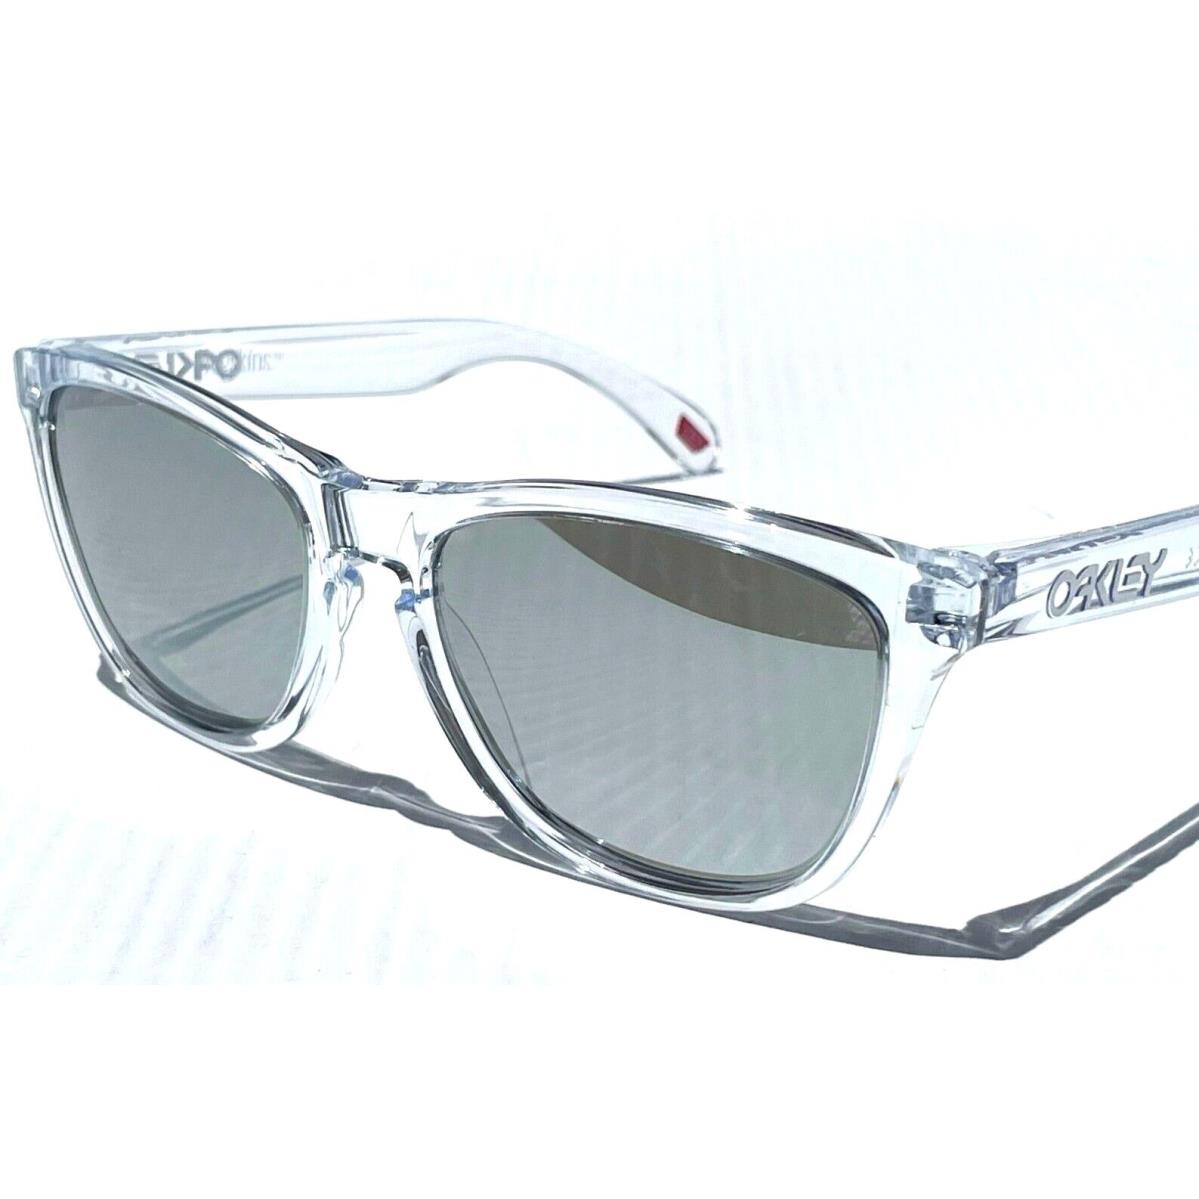 Oakley Frogskins Clear Crystal Polarized Galaxy Chrome Lens Sunglass 9013